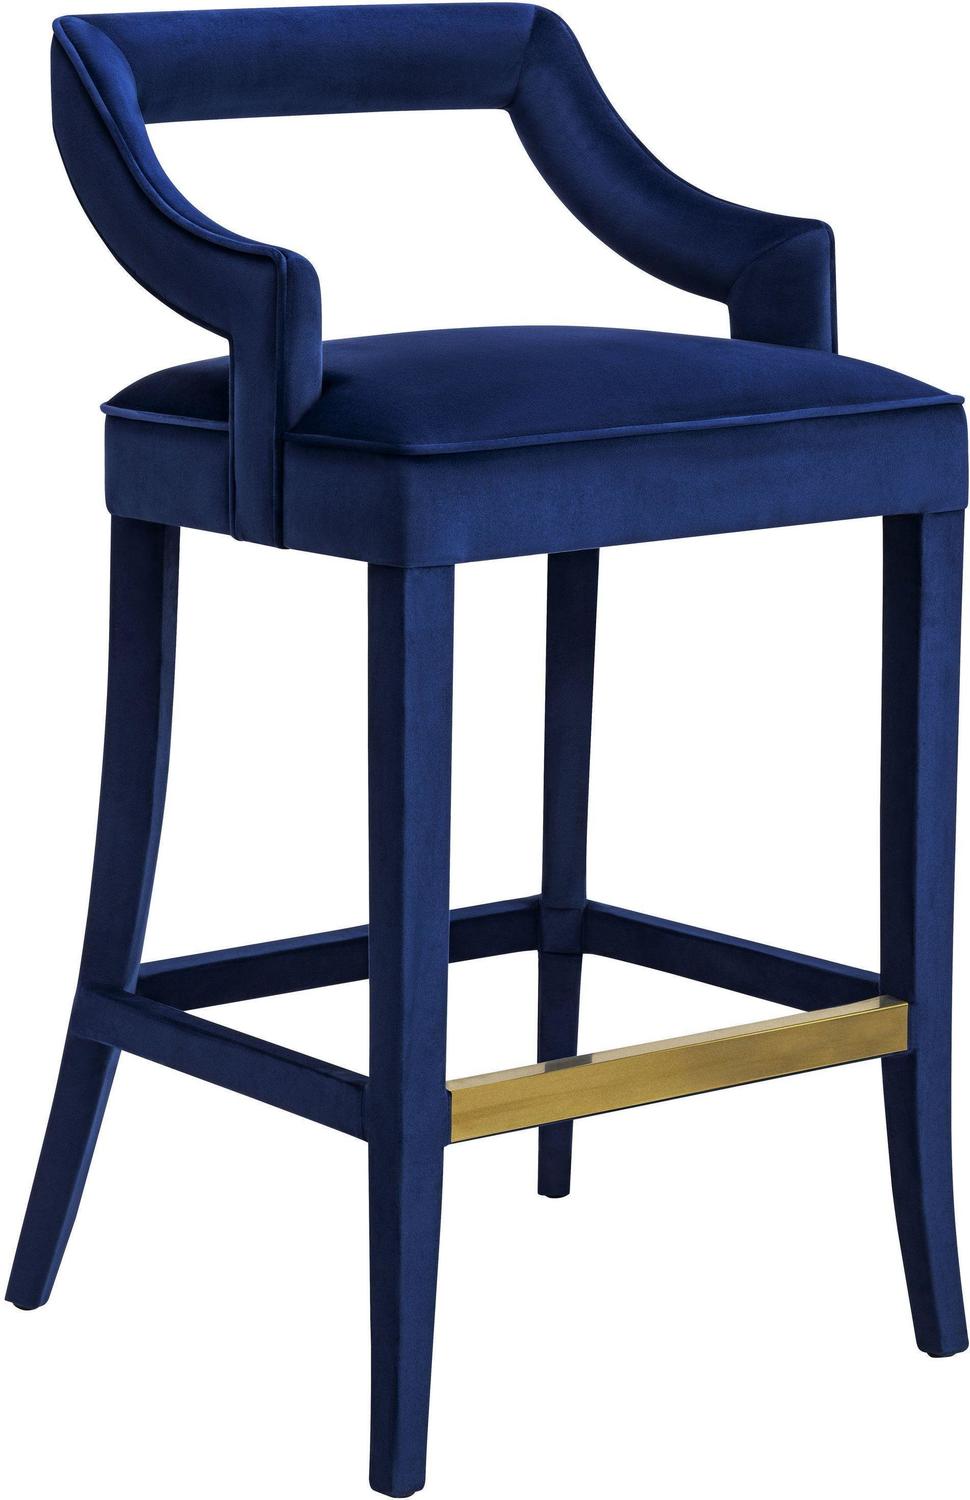 4 bar stools Contemporary Design Furniture Stools Navy